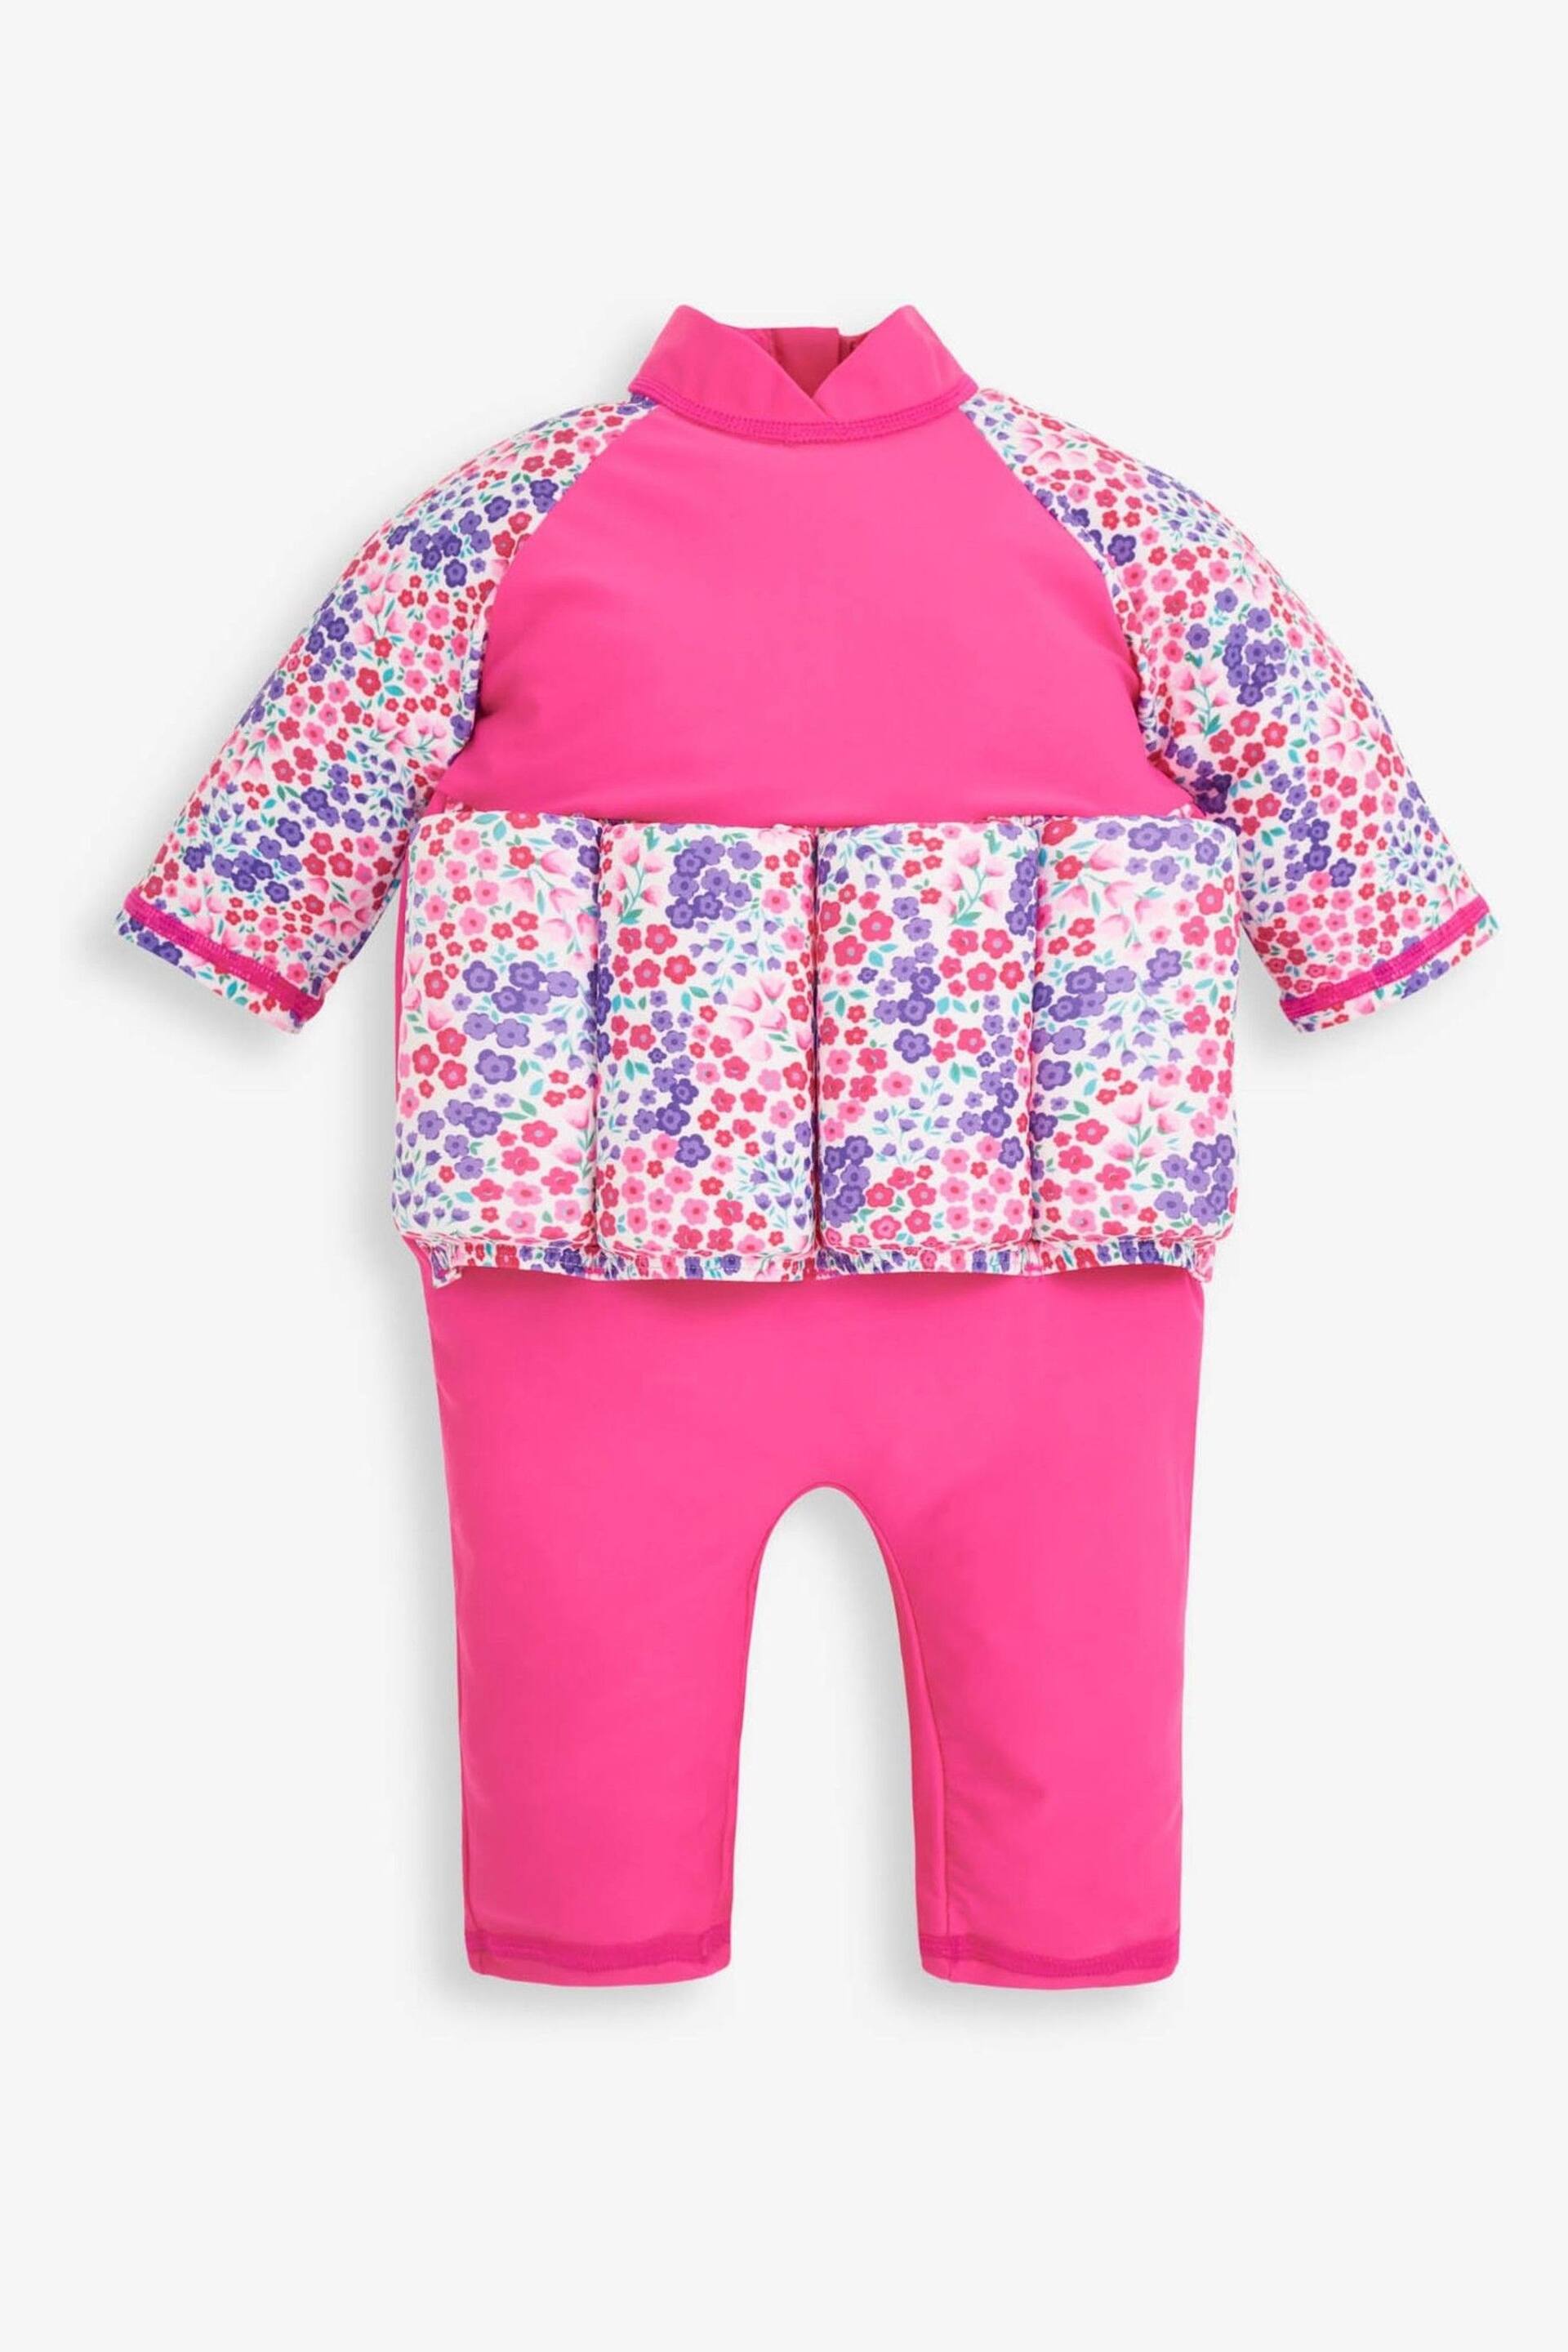 JoJo Maman Bébé Pink Floral UPF 50 Sun Protection Float Suit - Image 4 of 6